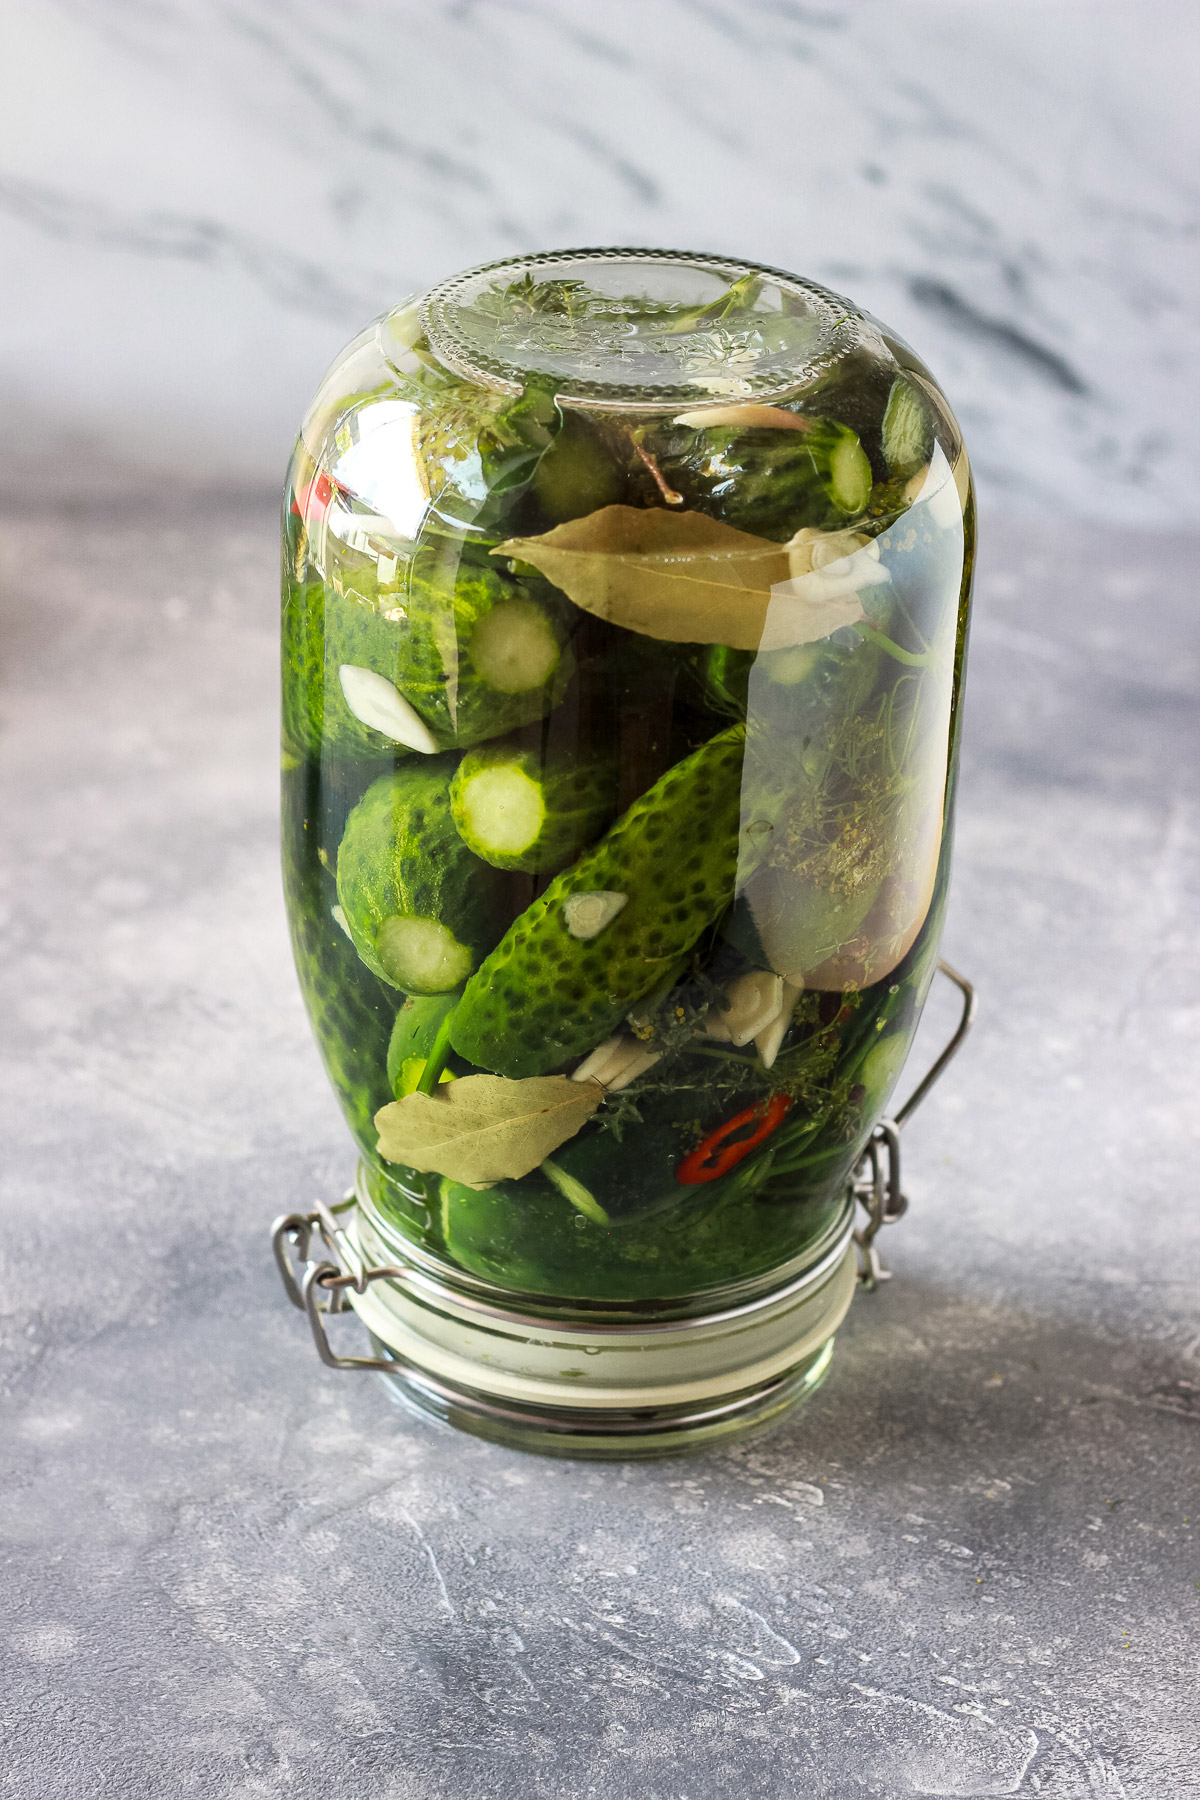 A jar of Russian pickles upside down